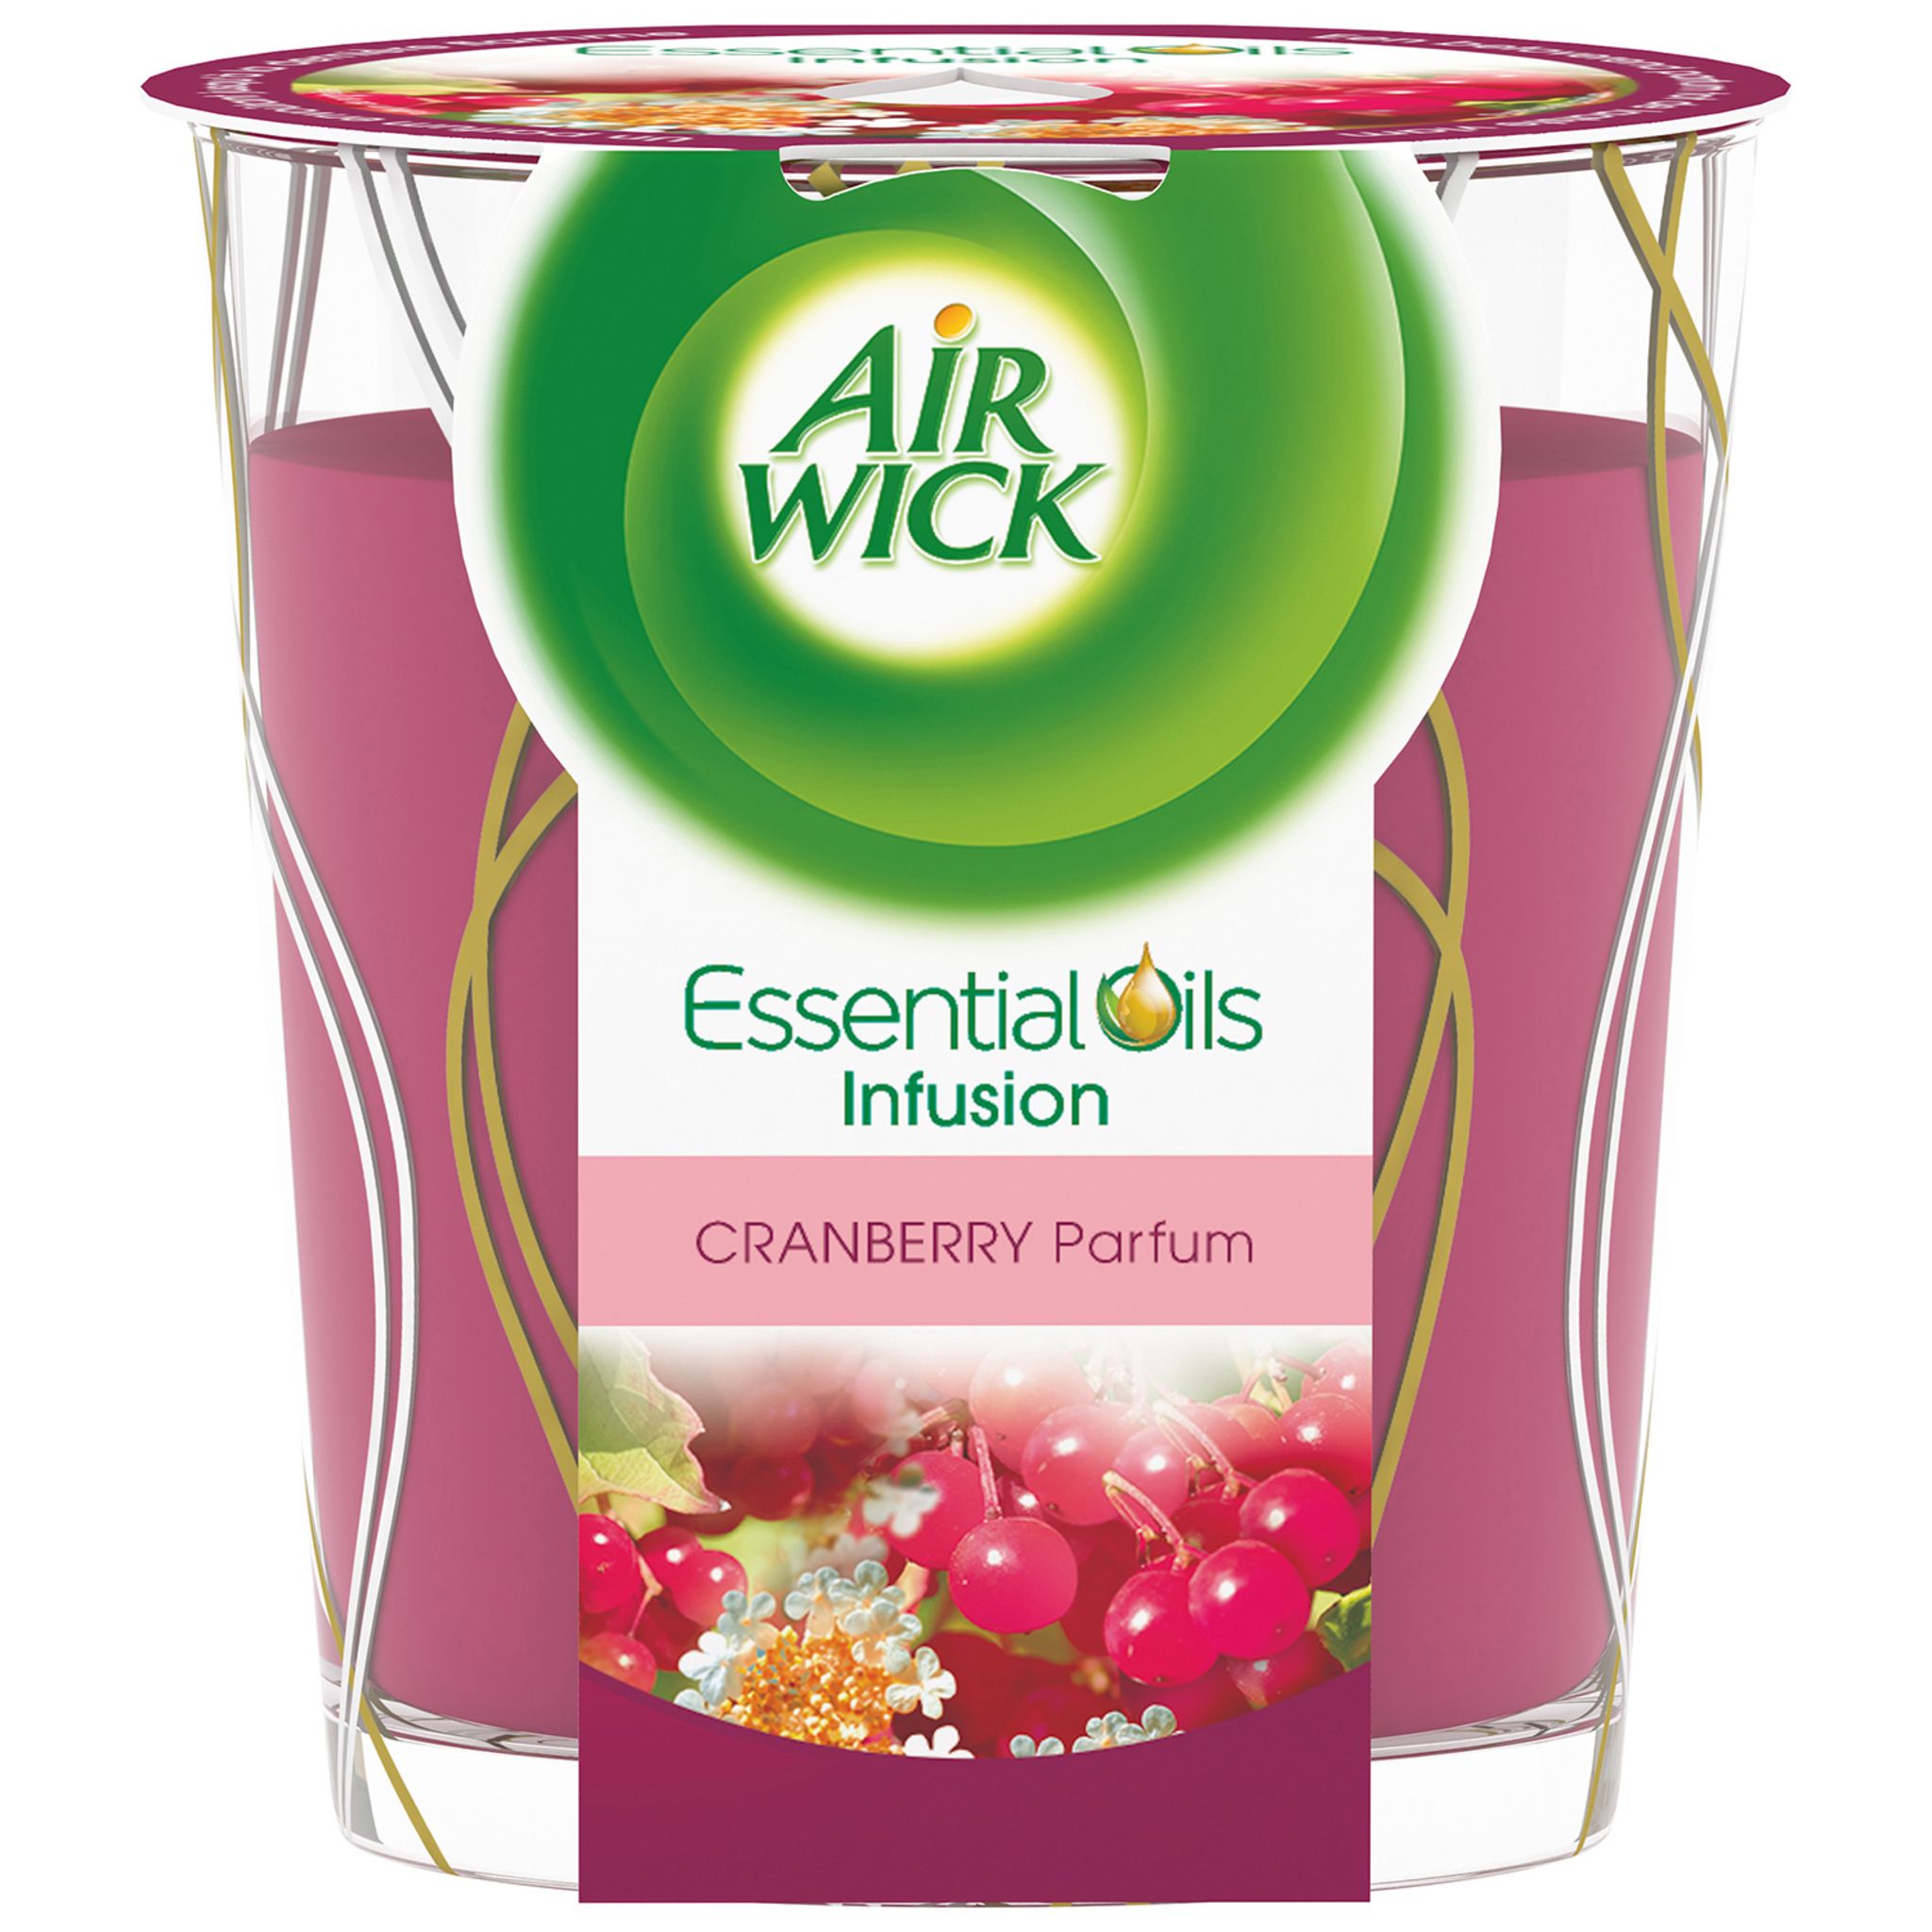 AIR WICK Essential Oils bougie cranberry 1 bougie pas cher 